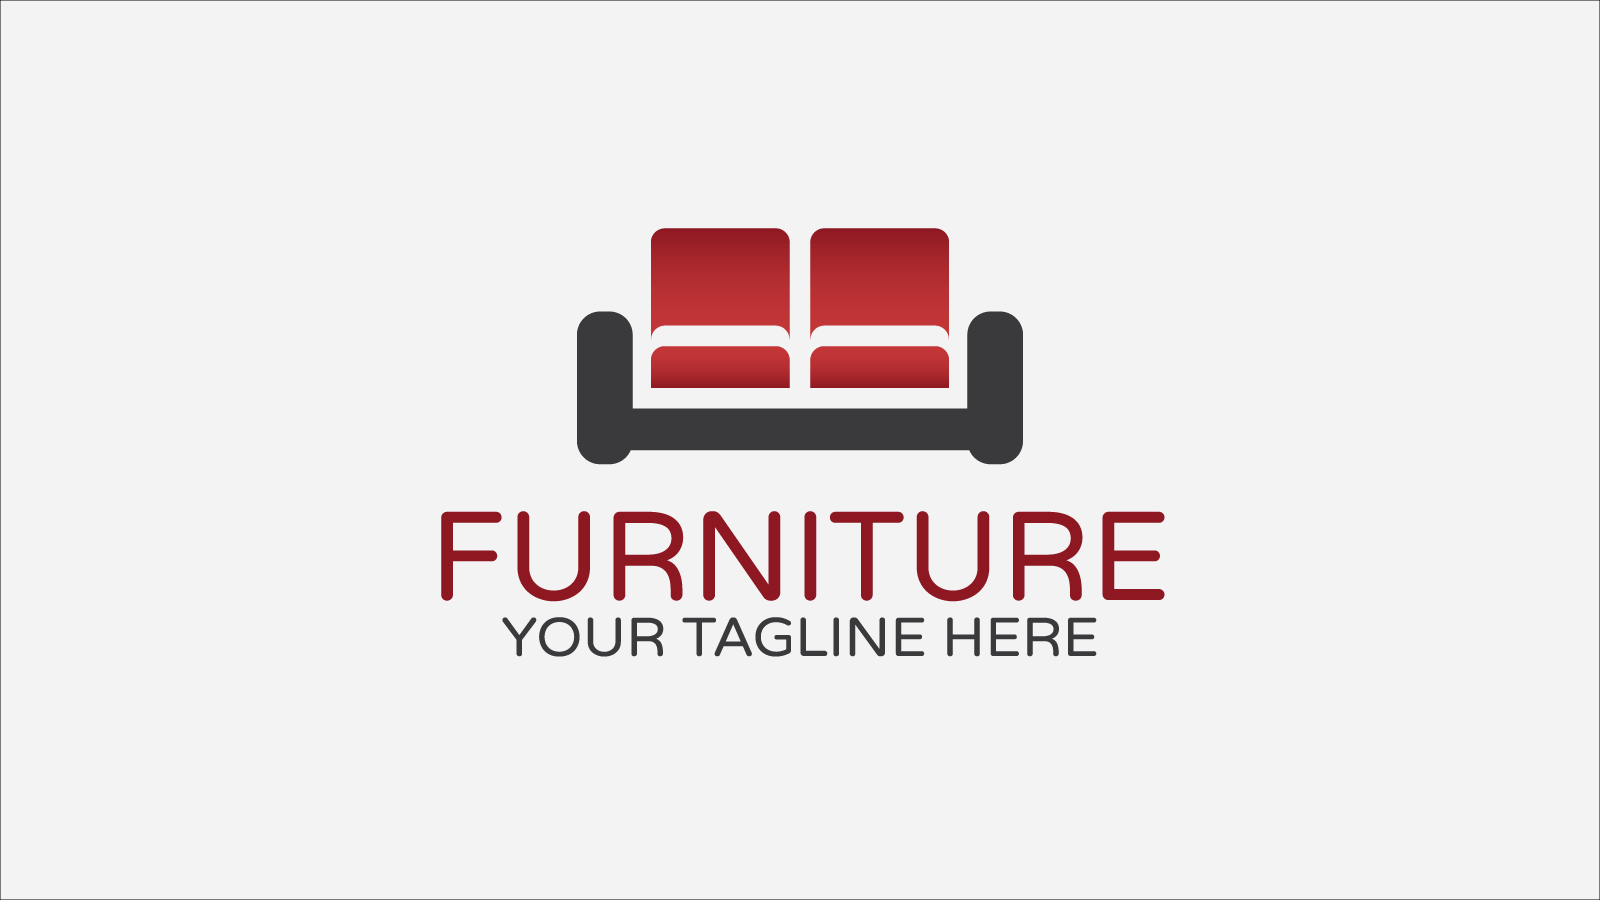 FURNITURE free logo design | Zfreegraphic: Free vector logo downloads